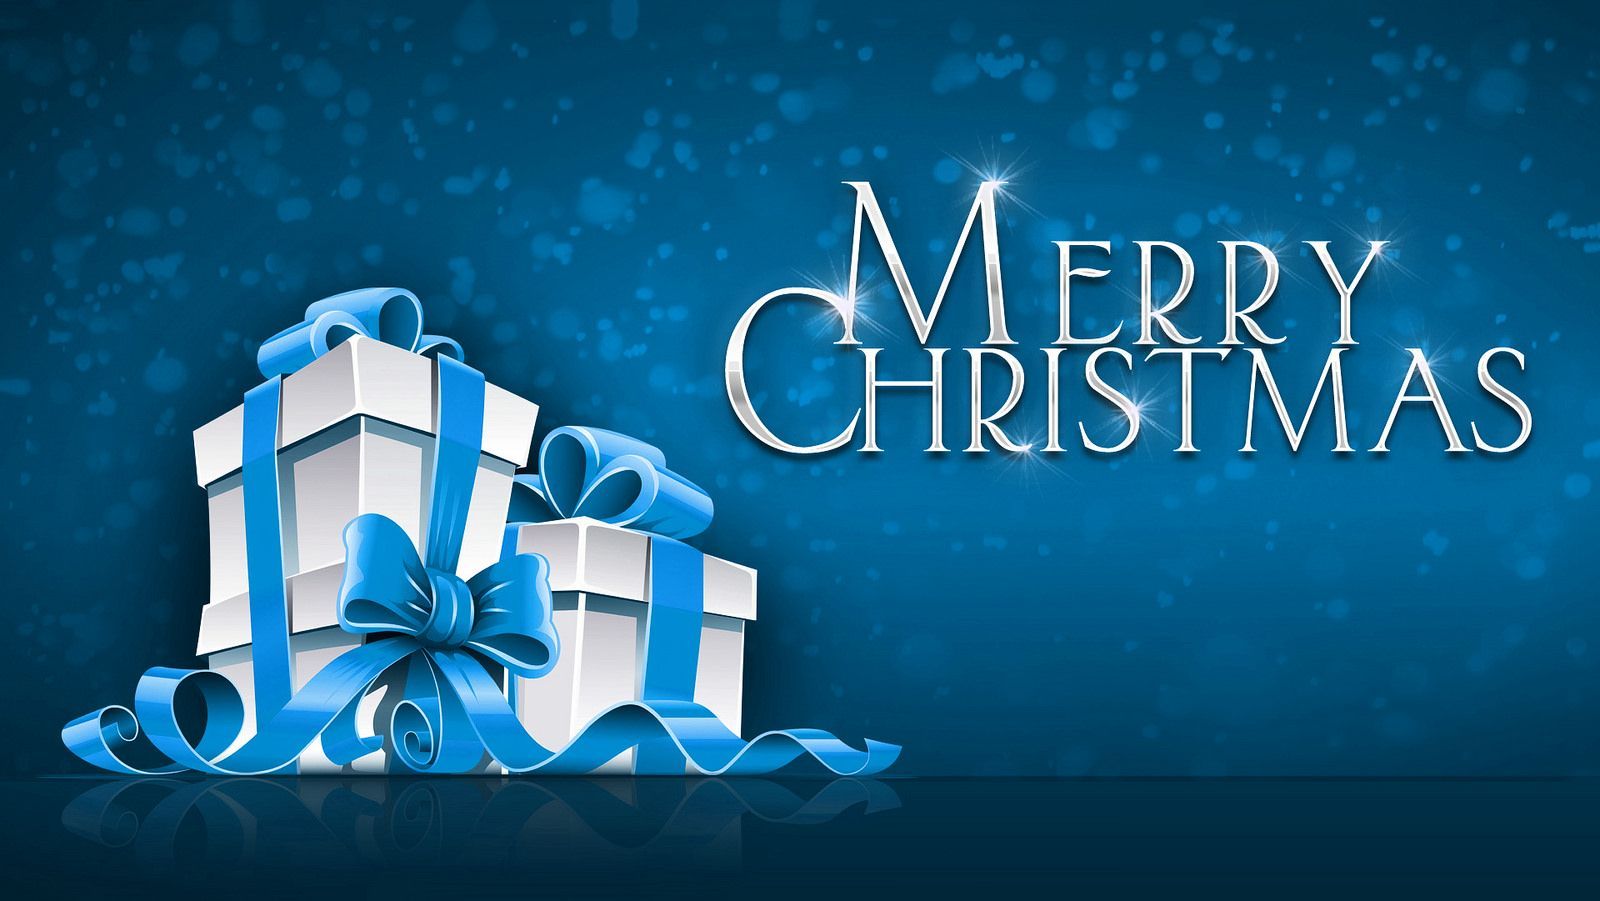 Merry Christmas 1080p Widescreen HD Wallpaper. Merry Christmas Picture, Merry Christmas Message, Merry Christmas Image Free